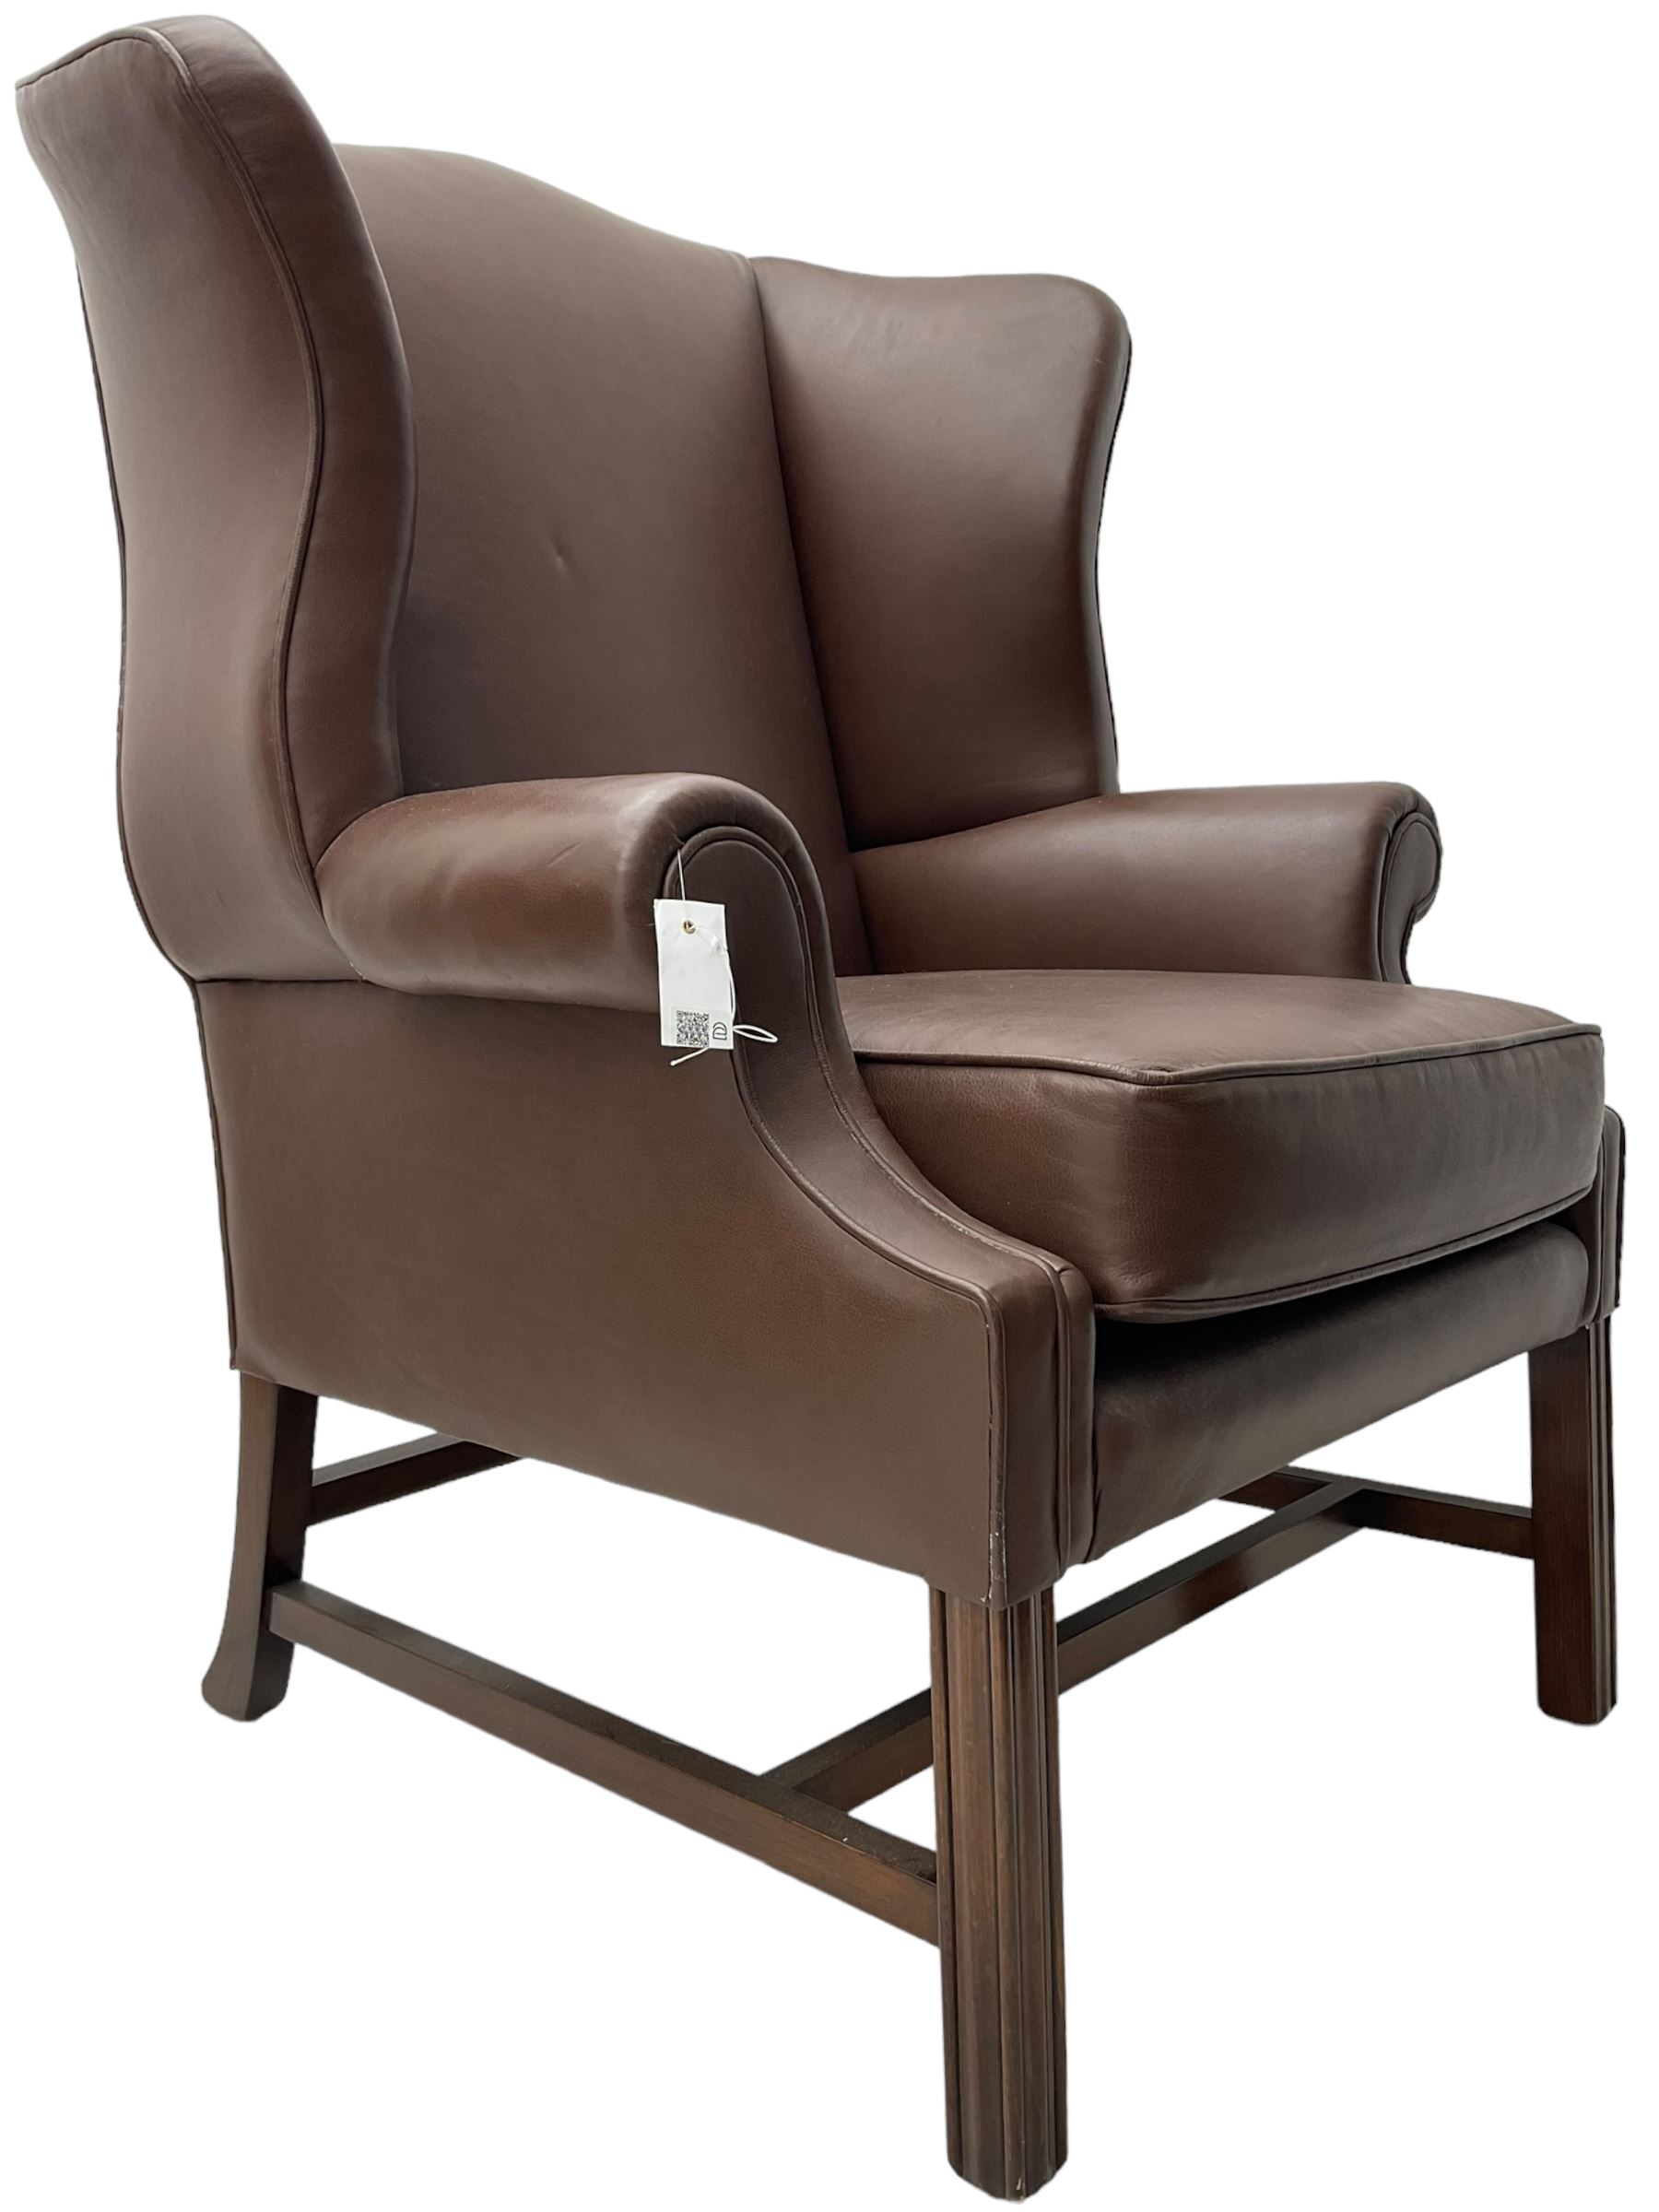 Georgian design wingback armchair - Image 3 of 6